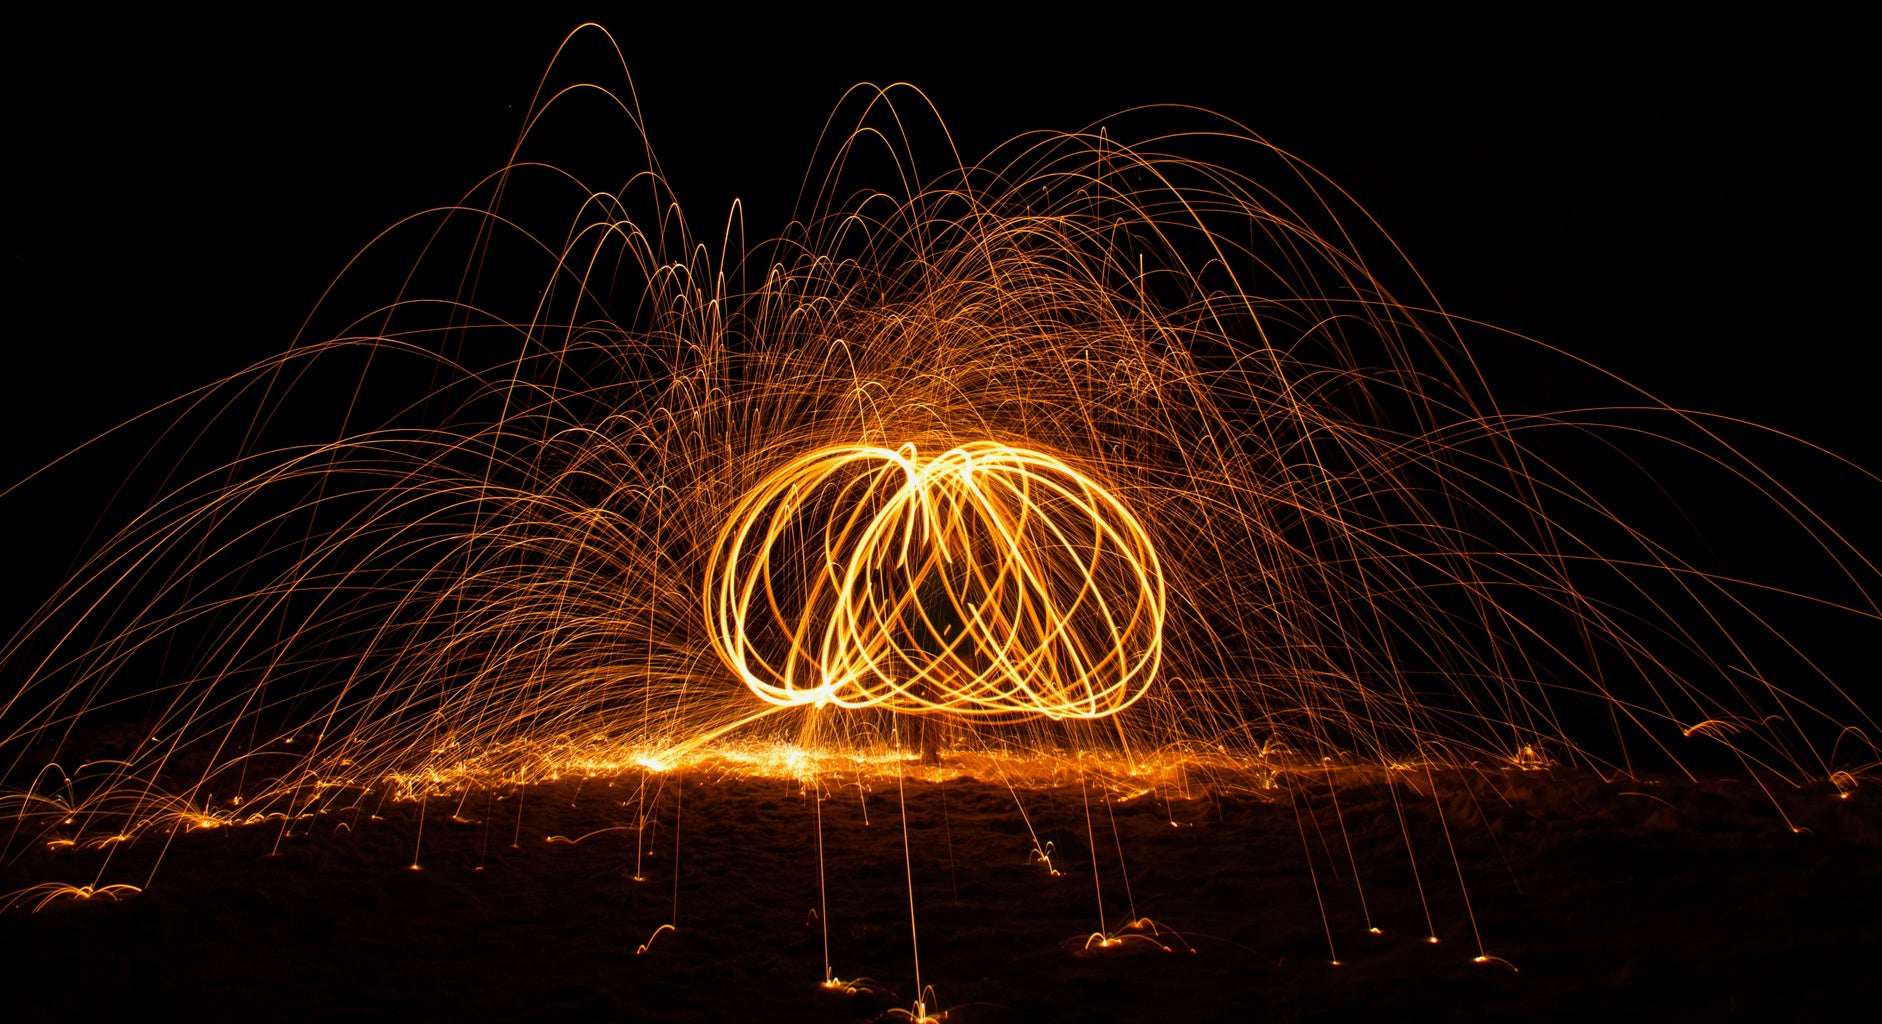 Night photo of steel wool photography.